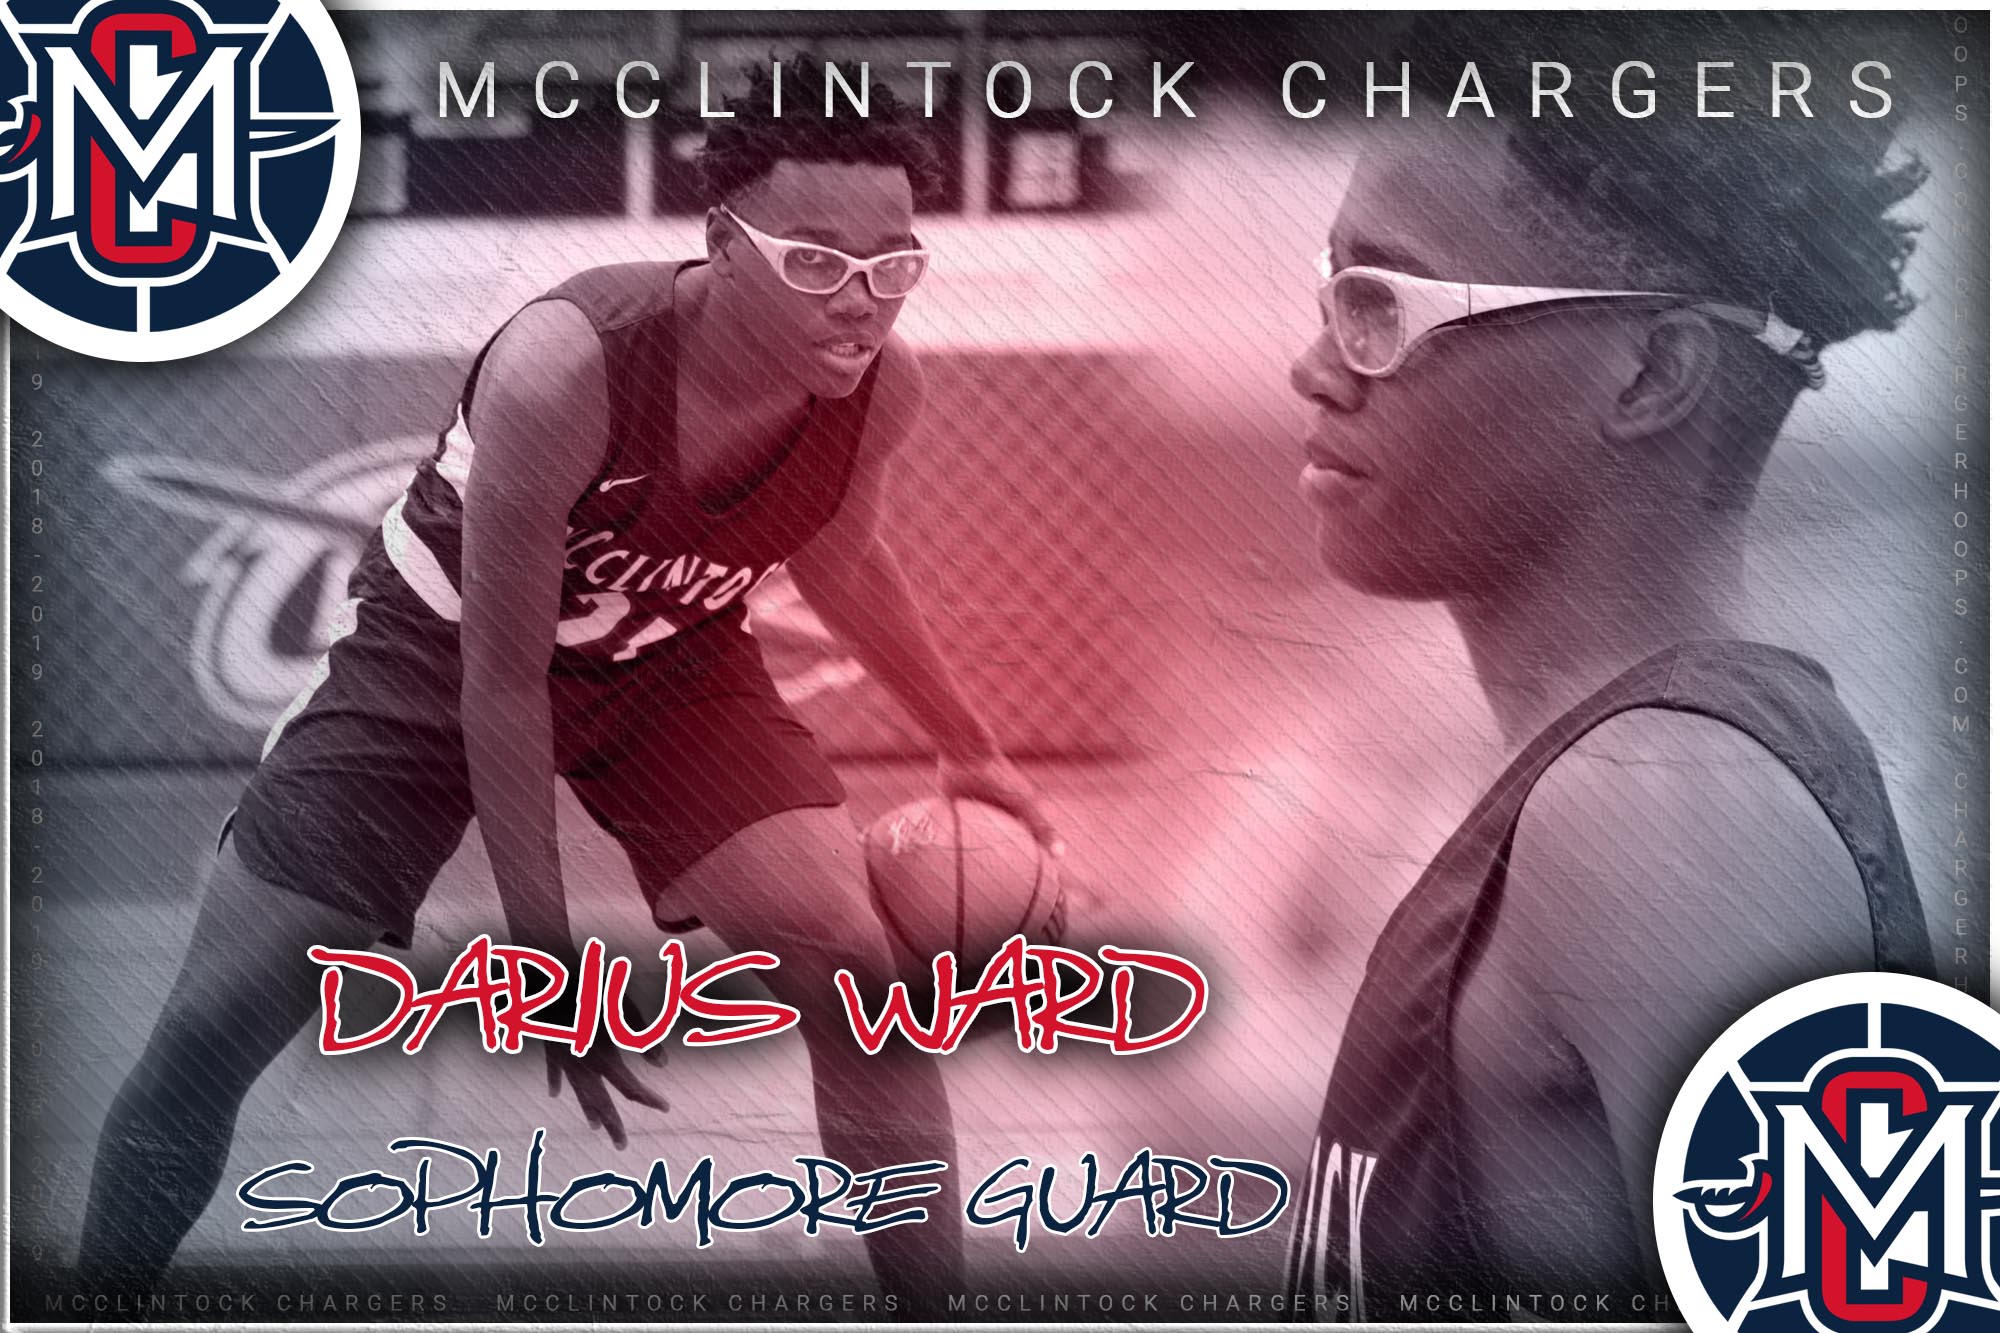 McClintock Chargers Basketball- Darius Ward